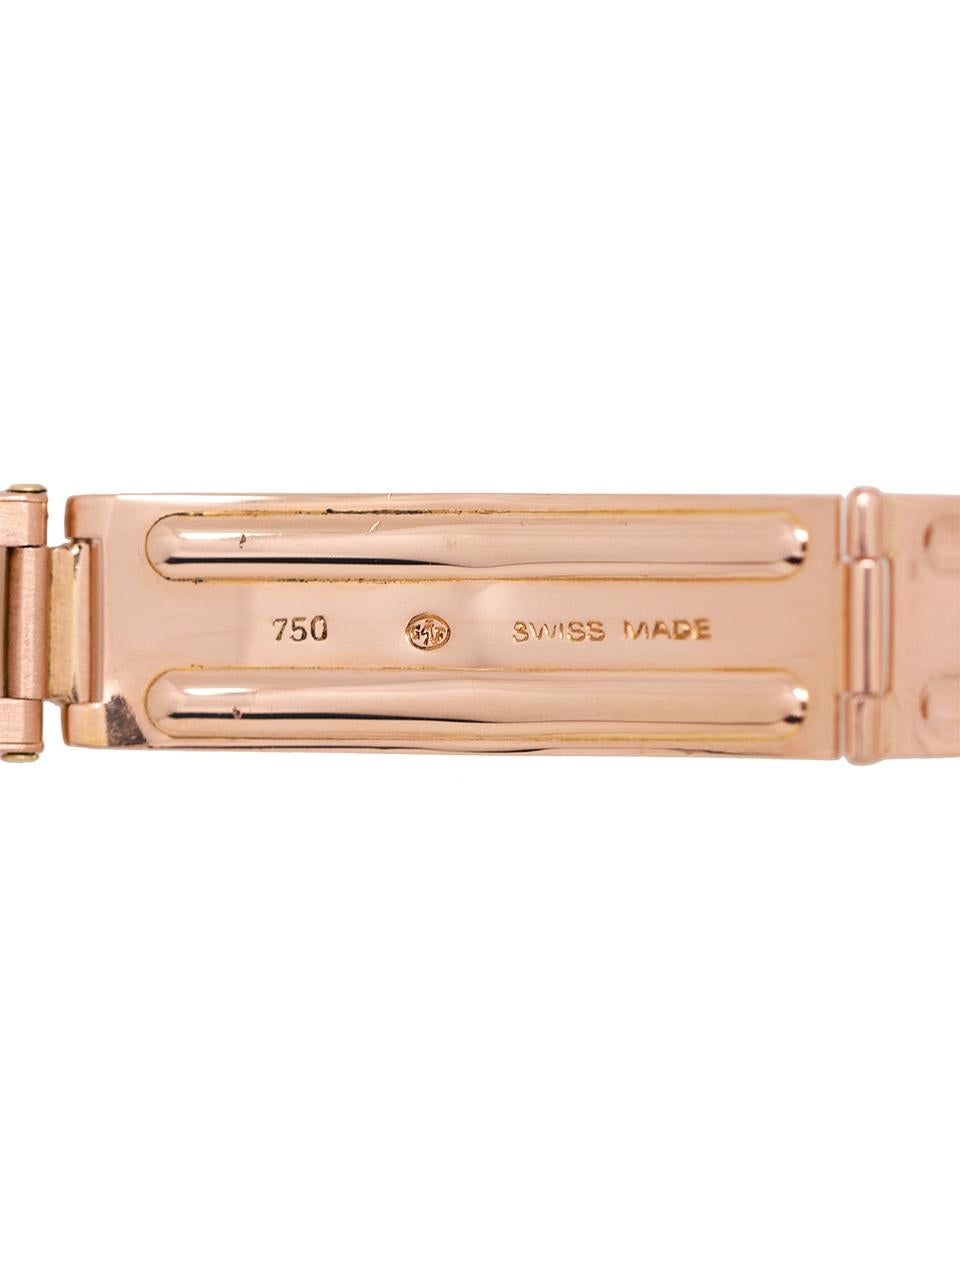 Rolex Midsize Datejust Ref 6827 18 Karat Pink Gold, circa 1973 1